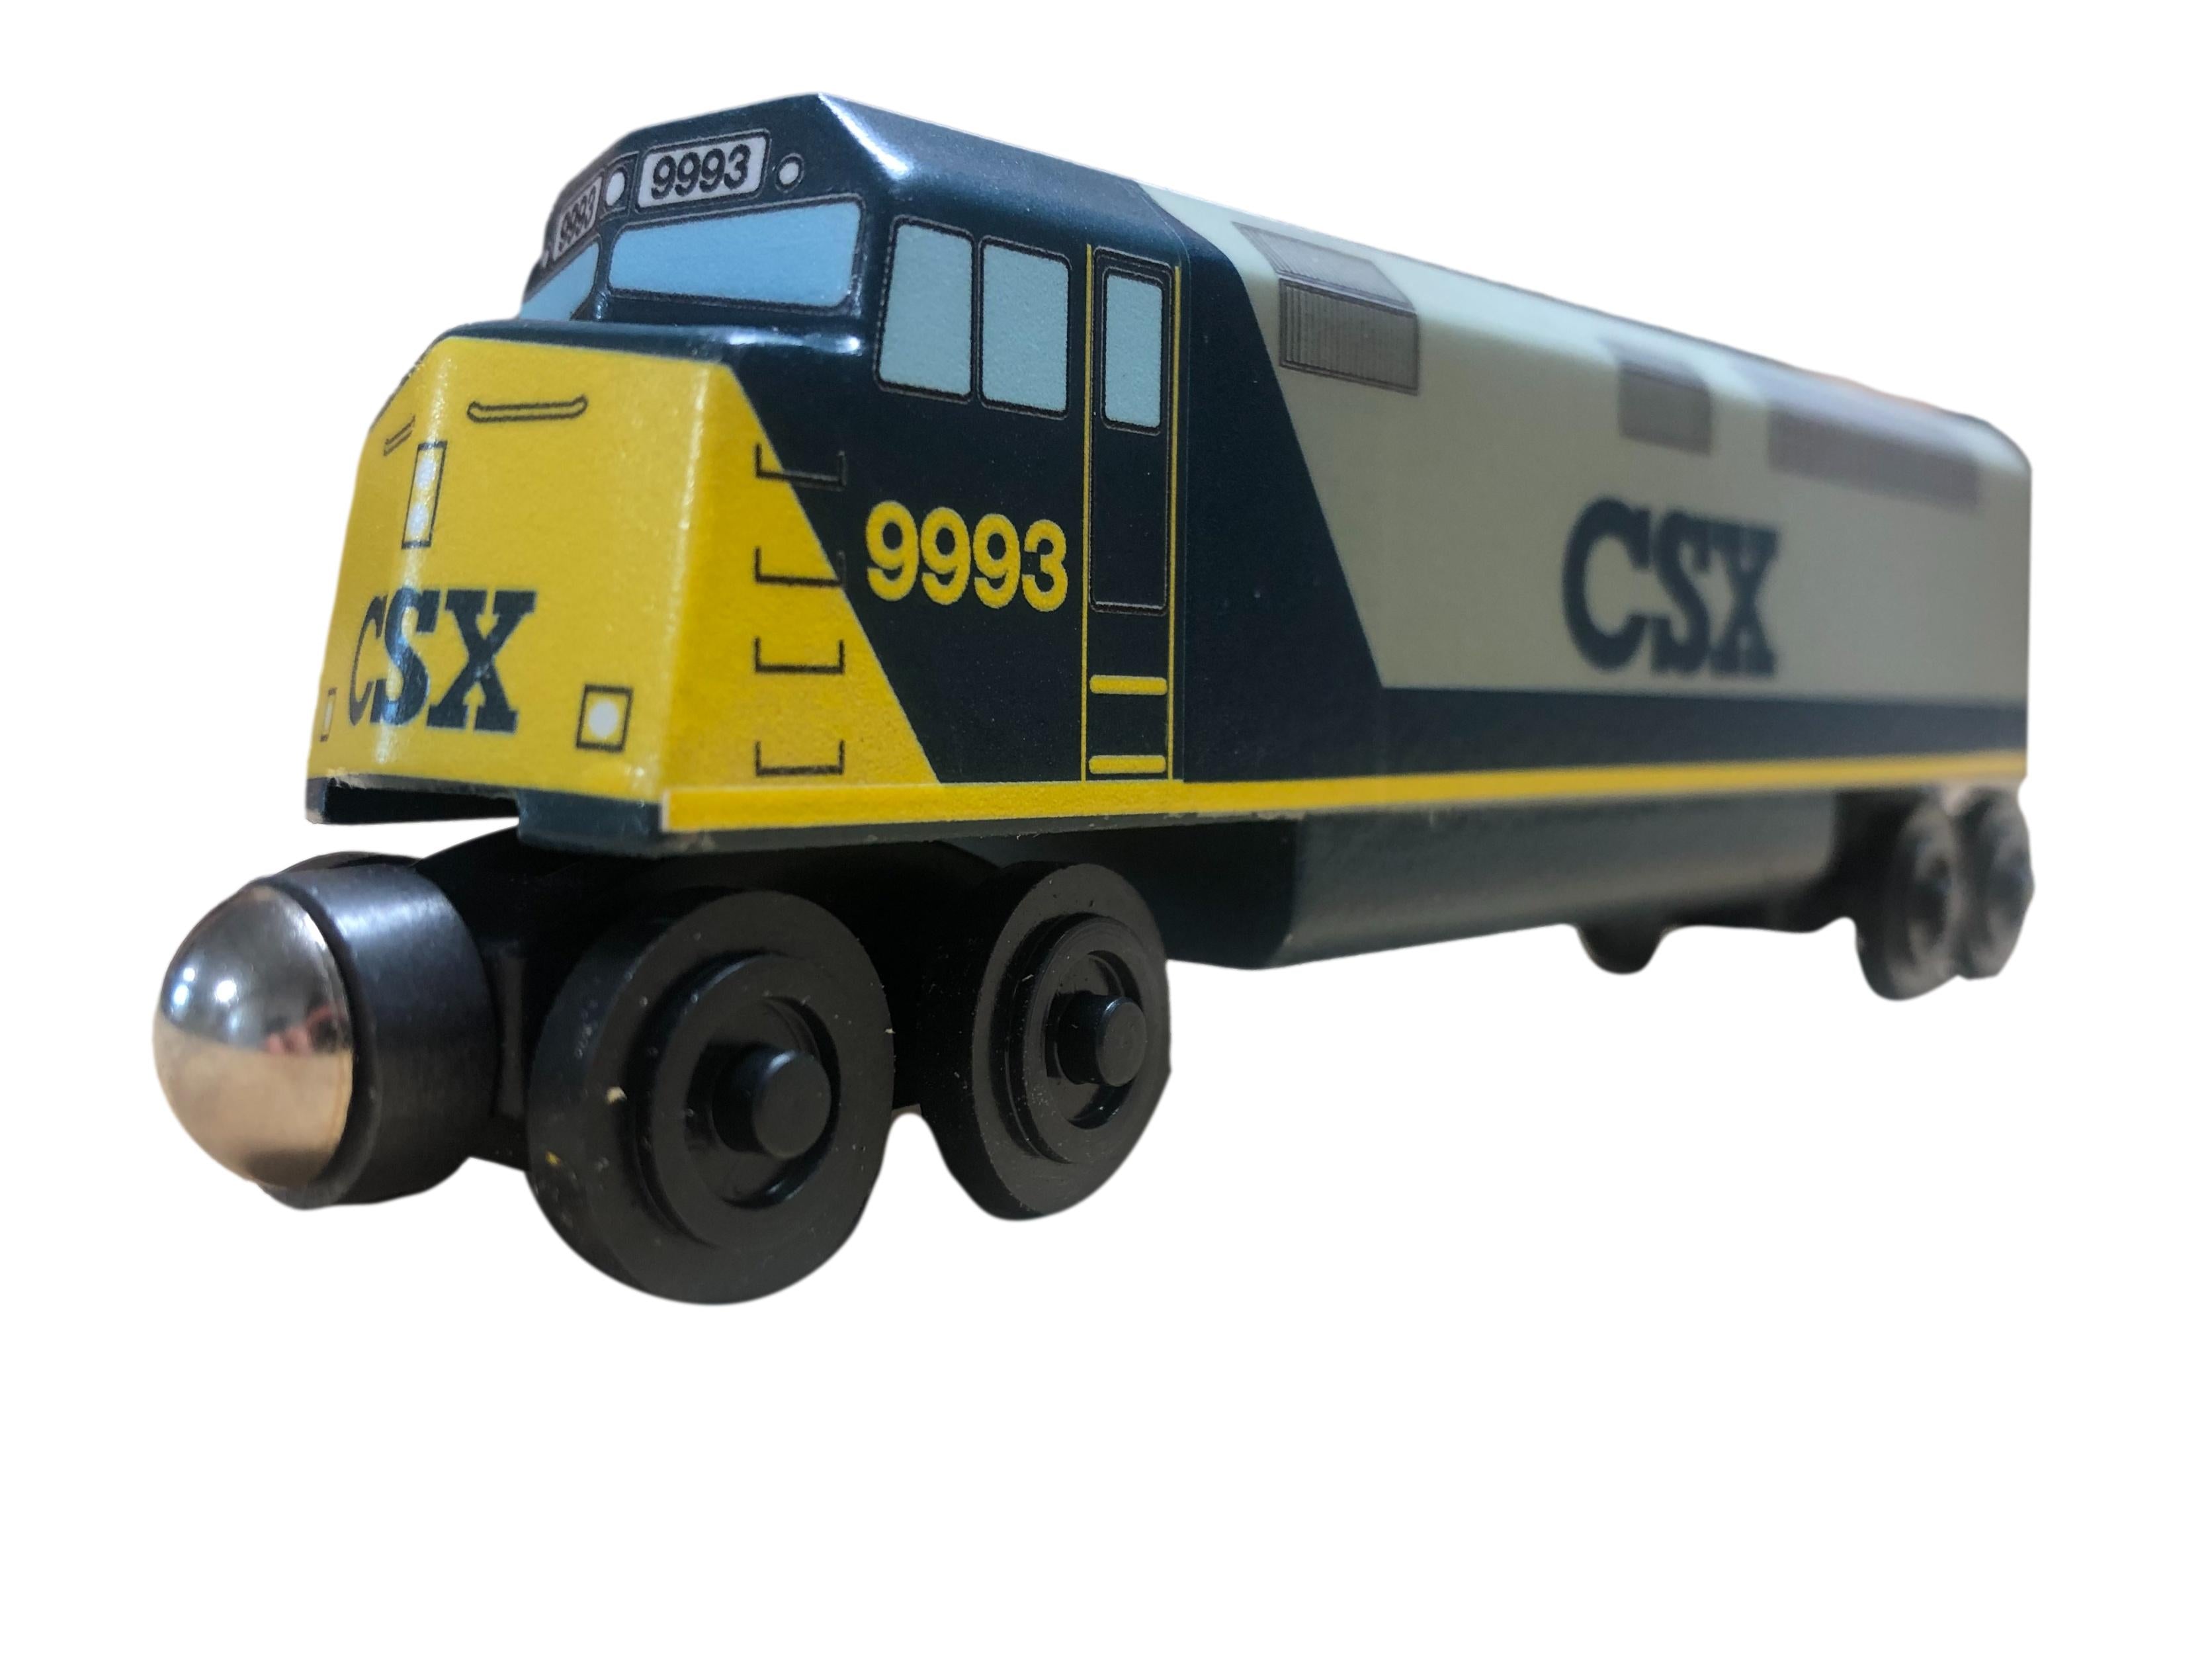 Csx Passenger Car Toy Trains The Whittle Shortline Railroad Wooden Toy Trains 4288